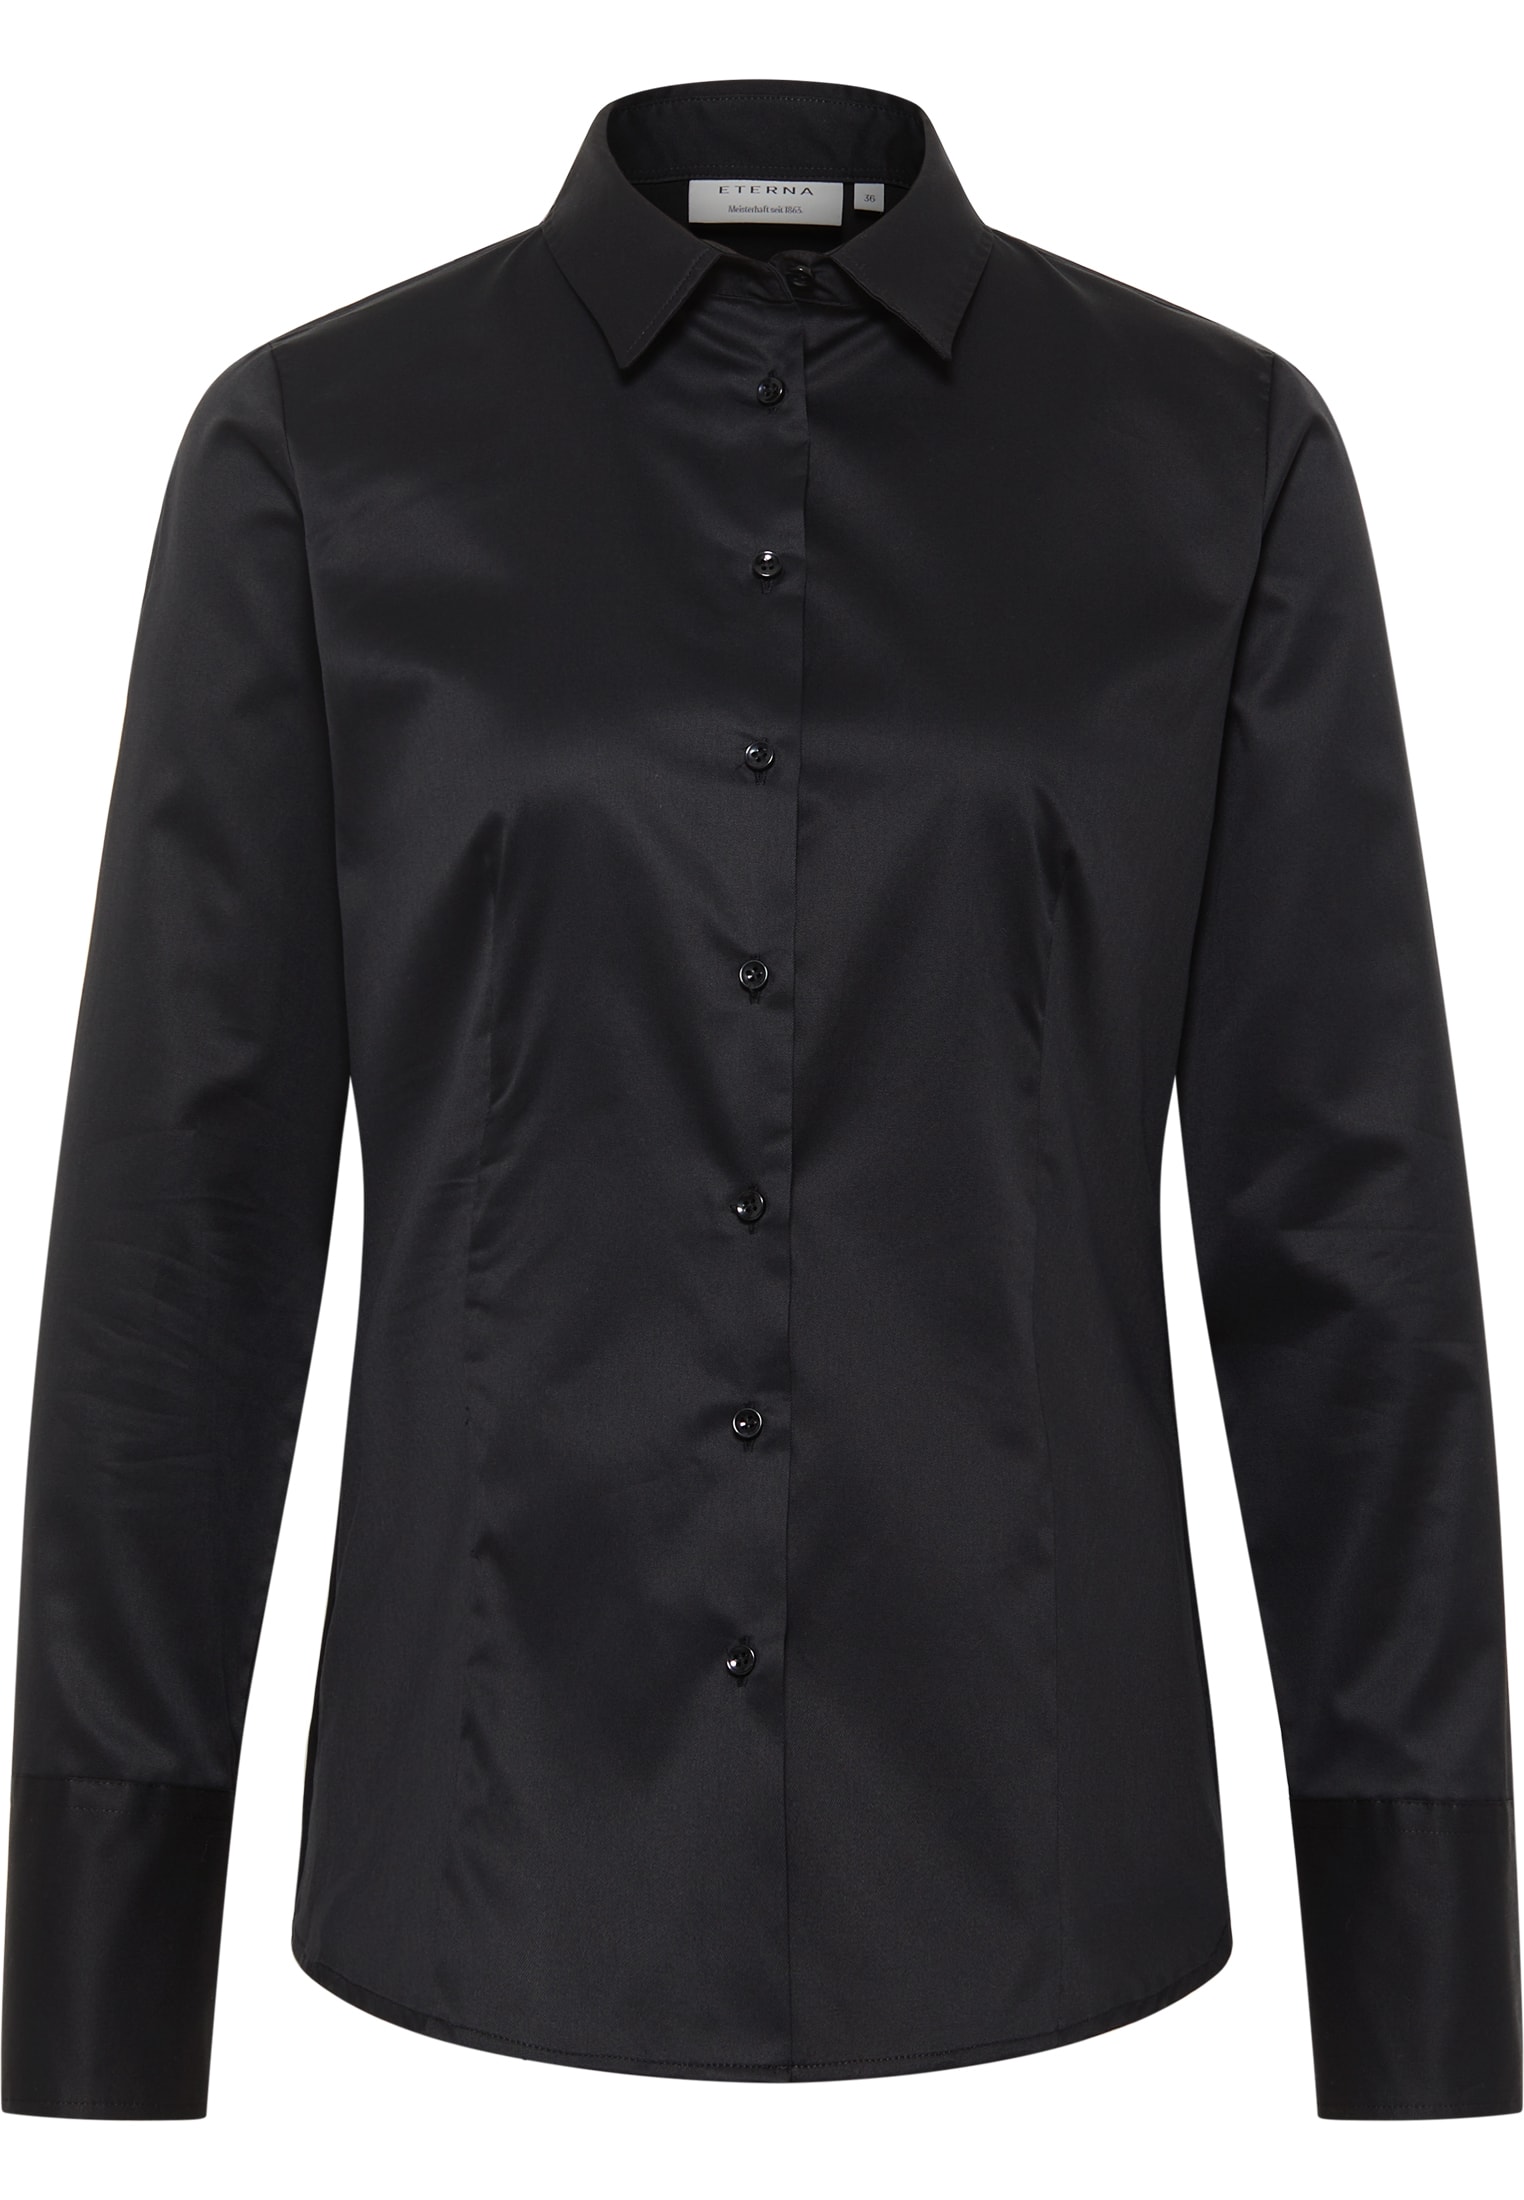 Cover Shirt Blouse in black plain | black | 38 | long sleeve |  2BL00075-03-91-38-1/1